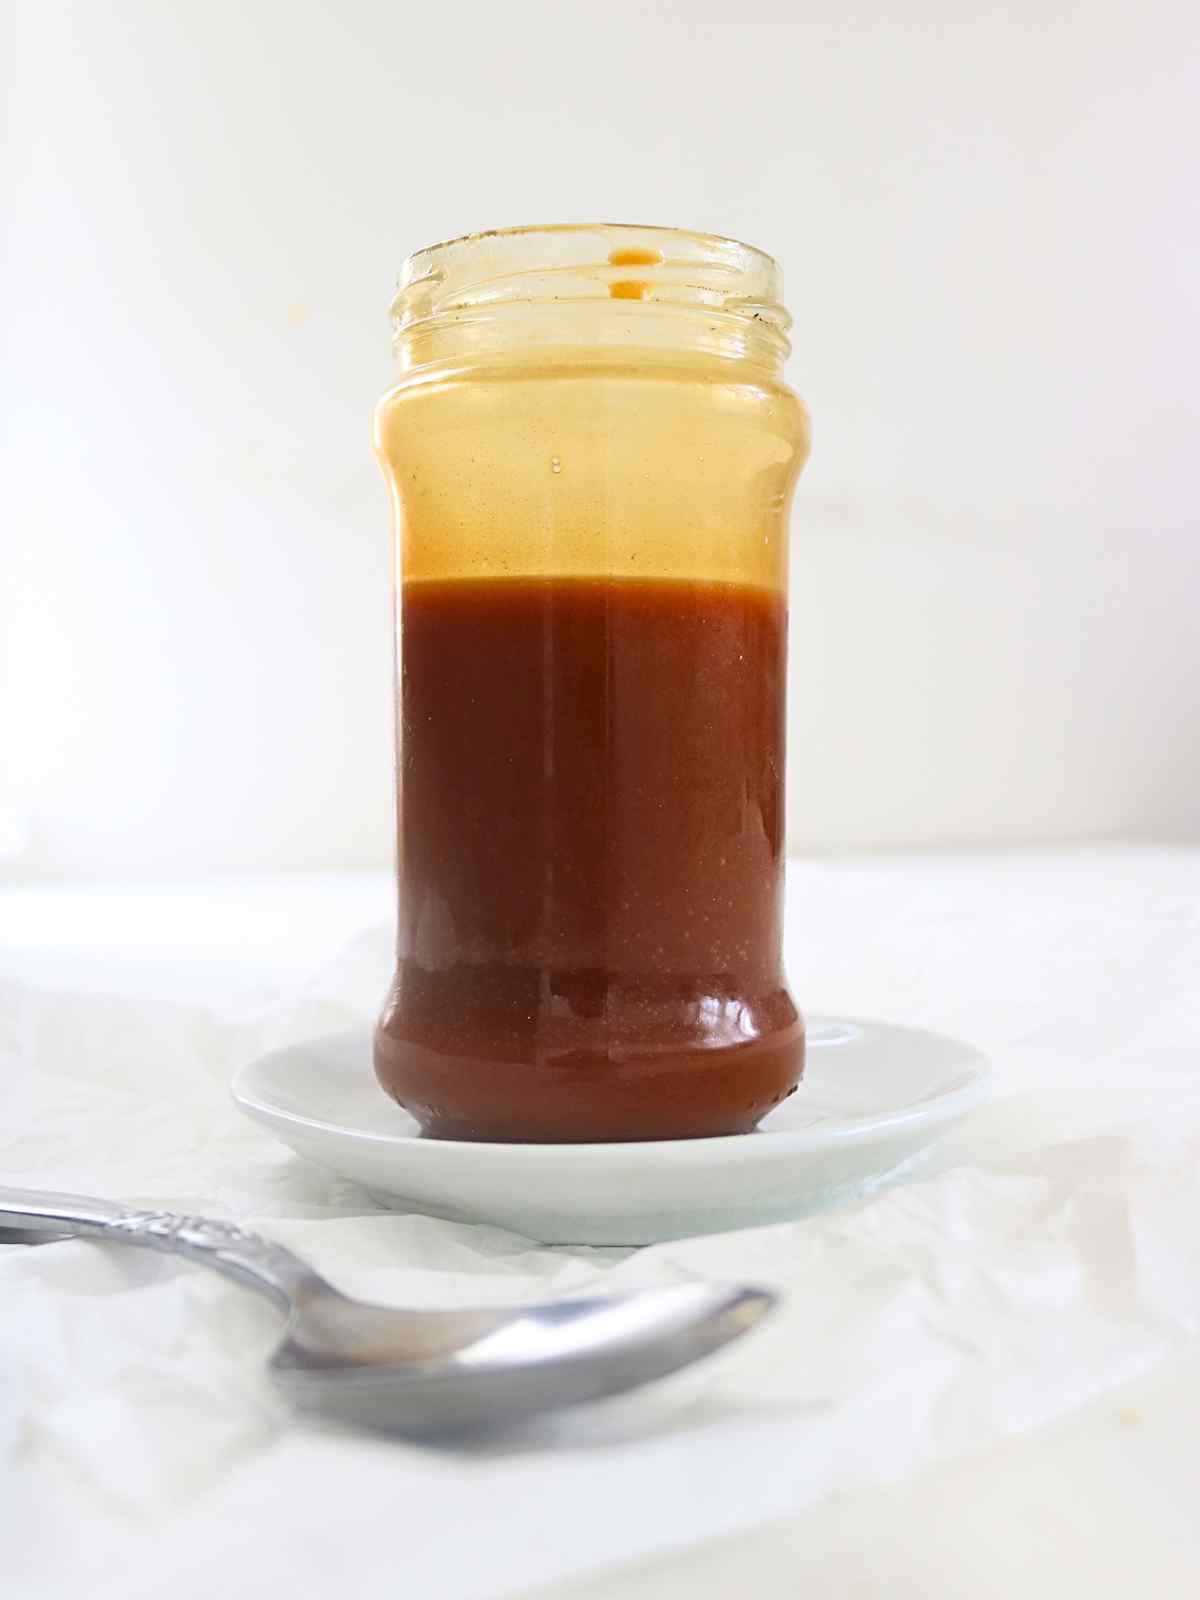 Vegan salted caramel served in a glass jar.